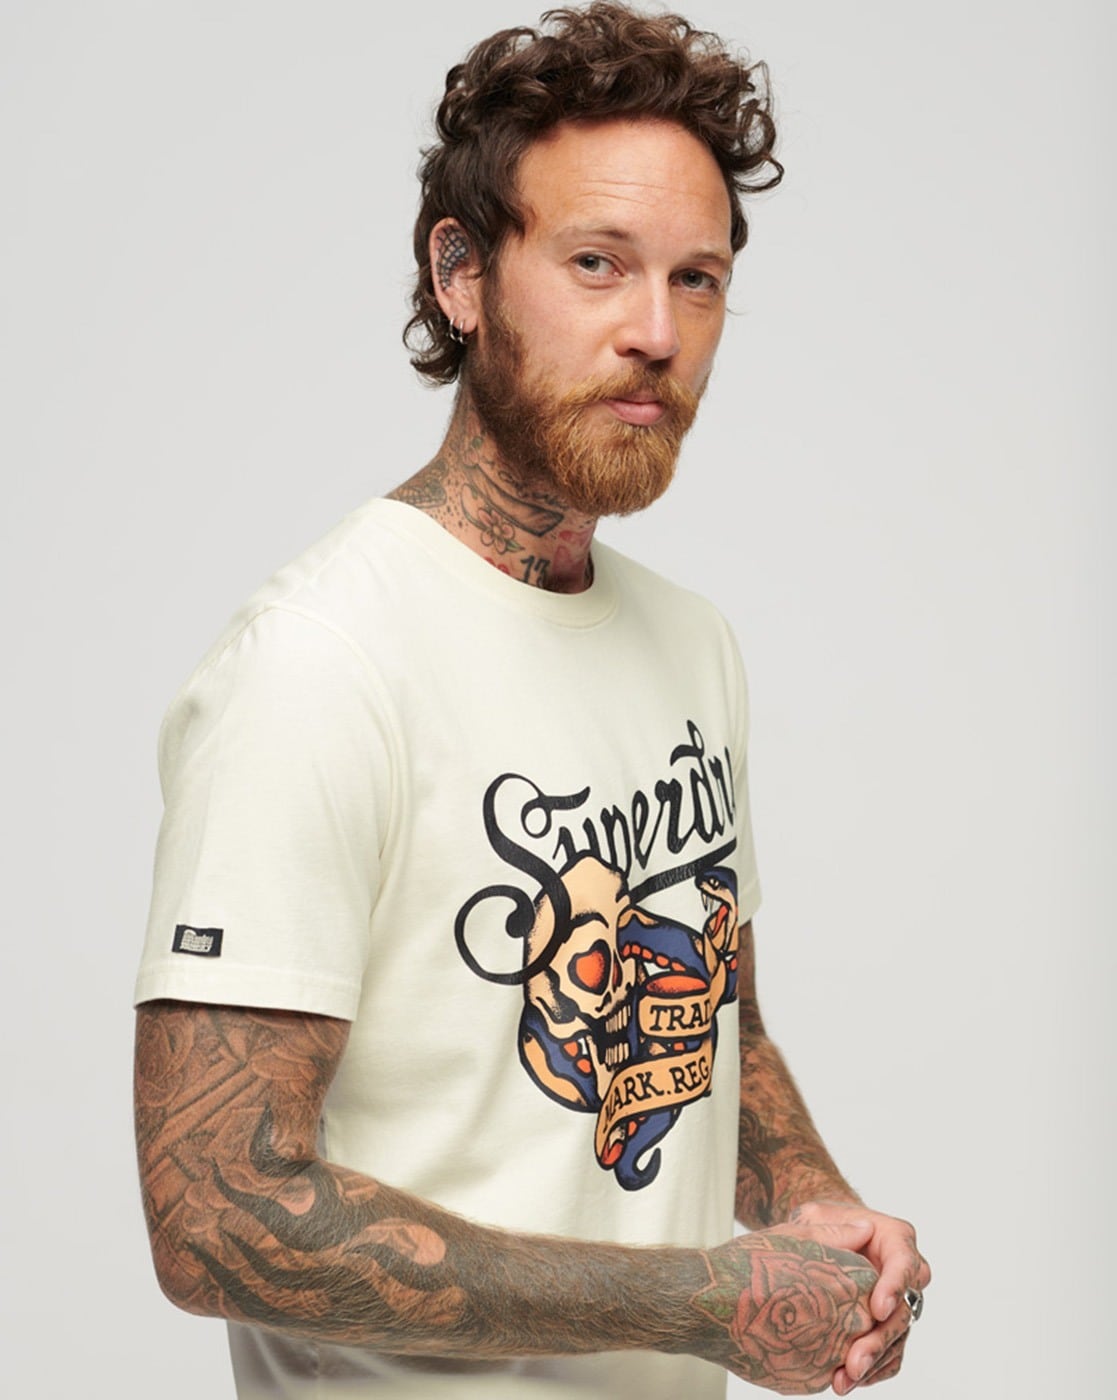 Oliver Peck Elm Street Tattoo t shirt — Anchorscreen Printing Cheap Thrills  Oliver Peck